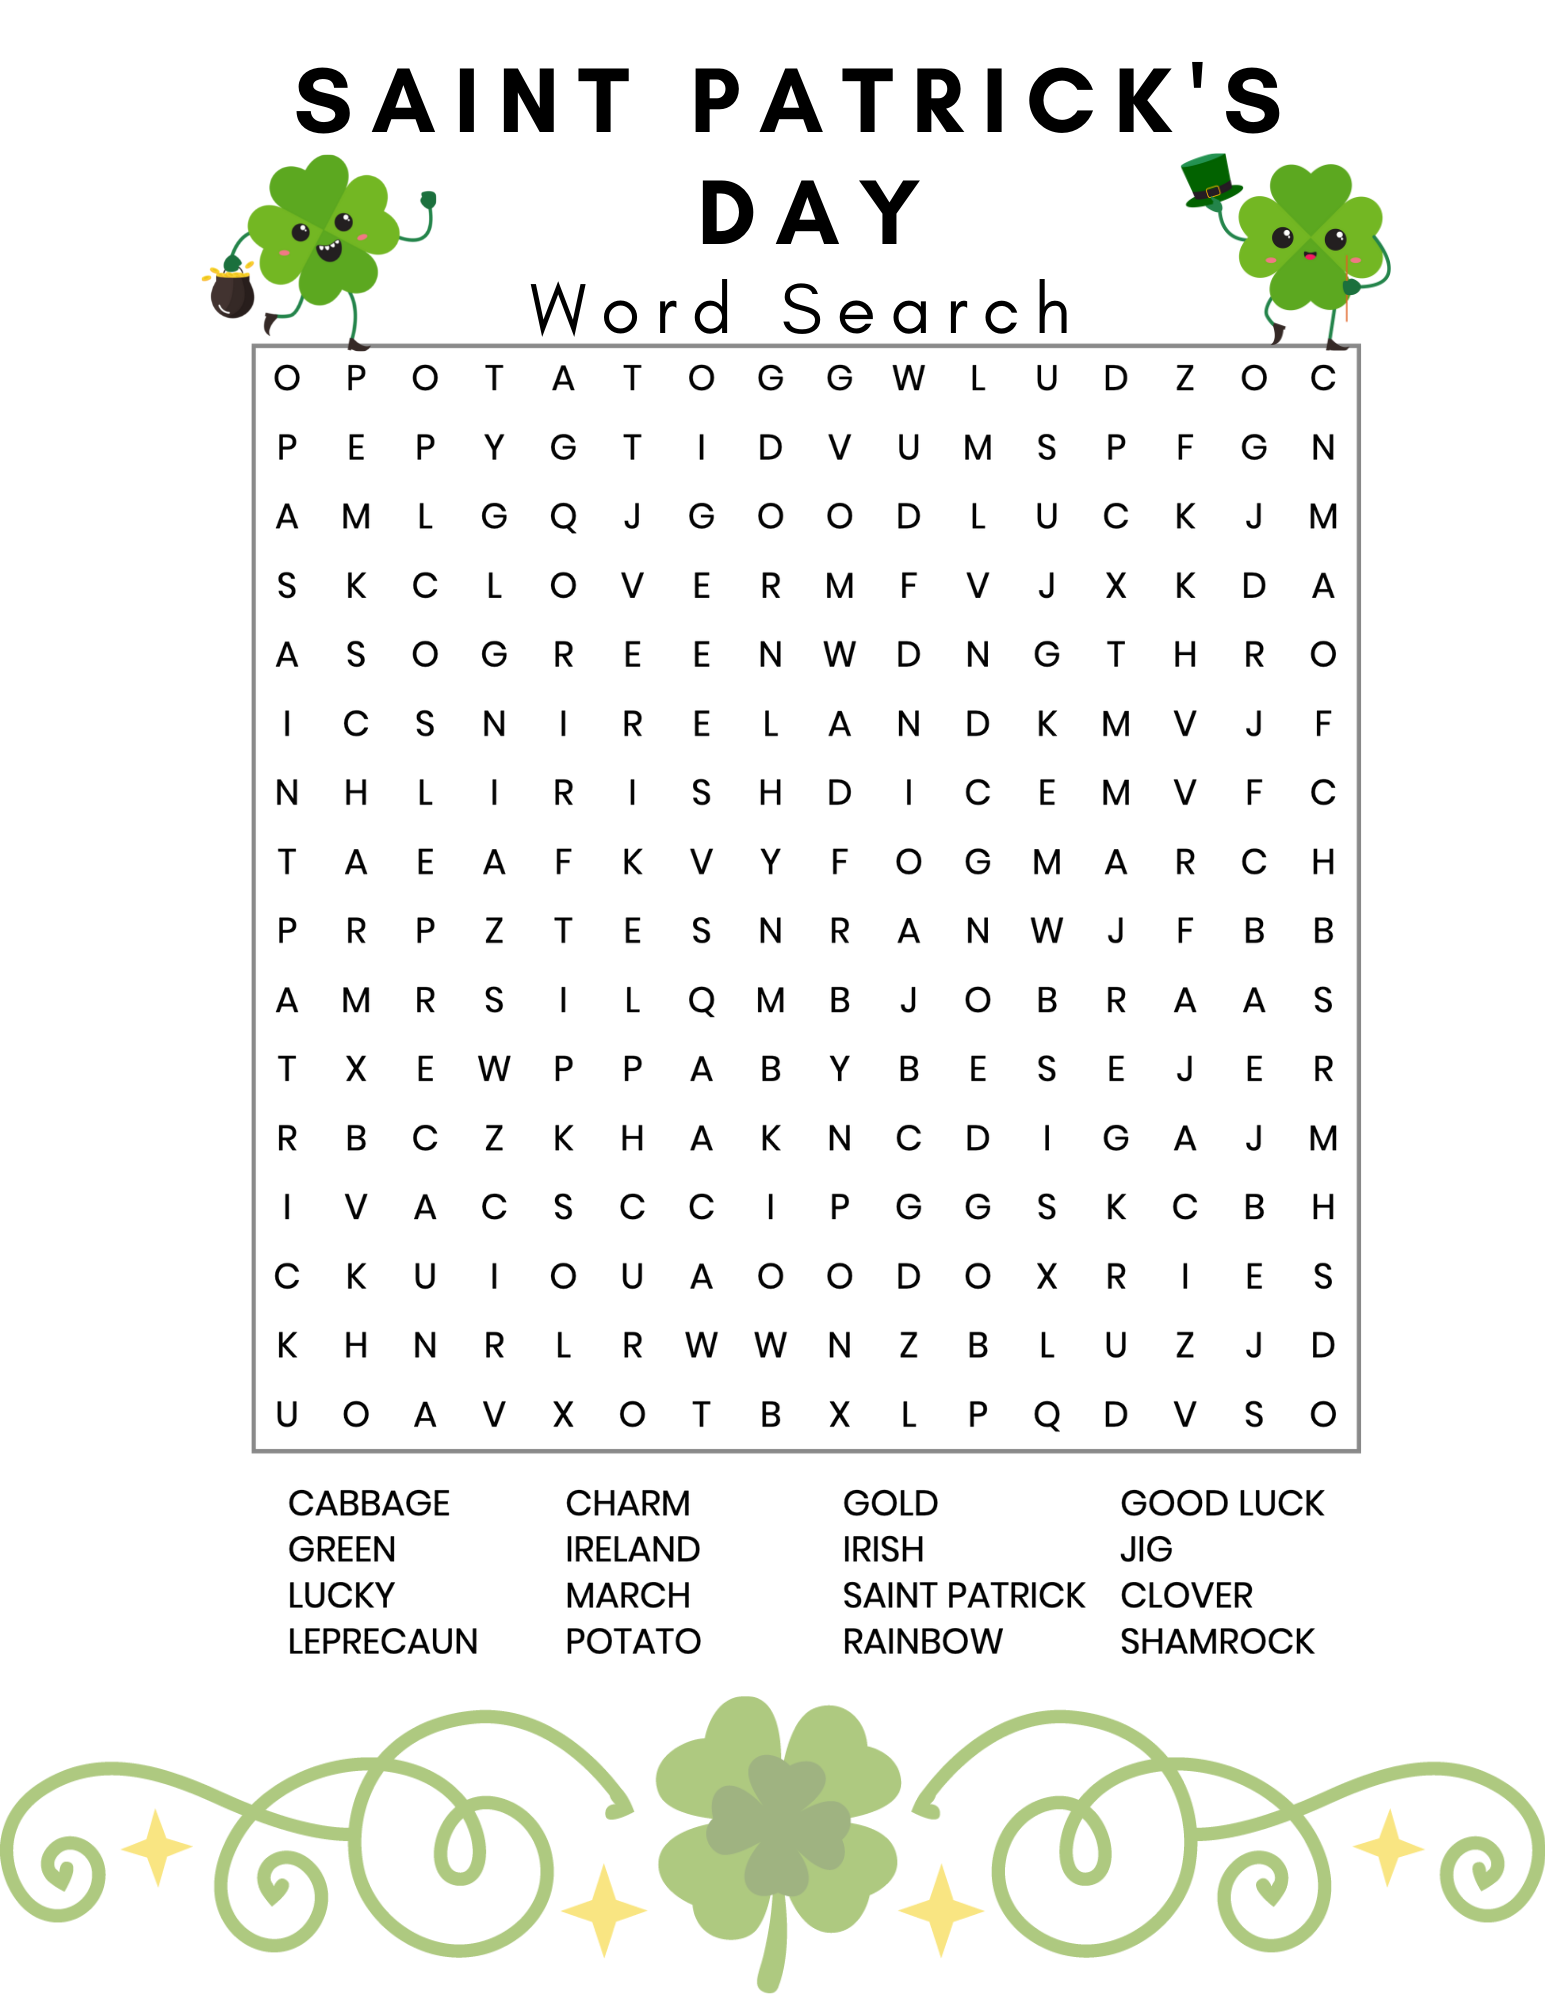 Saint Patrick's Day Word Search -Free